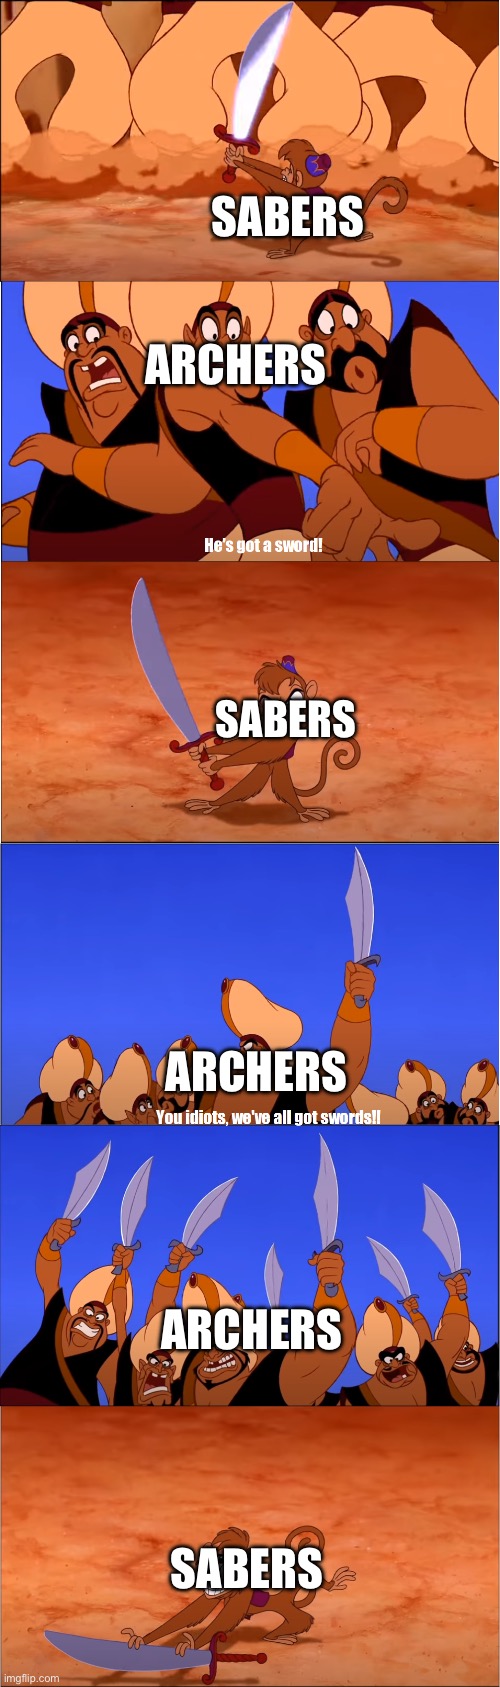 He's got a sword! | SABERS; ARCHERS; SABERS; ARCHERS; ARCHERS; SABERS | image tagged in he's got a sword,FGOmemes | made w/ Imgflip meme maker